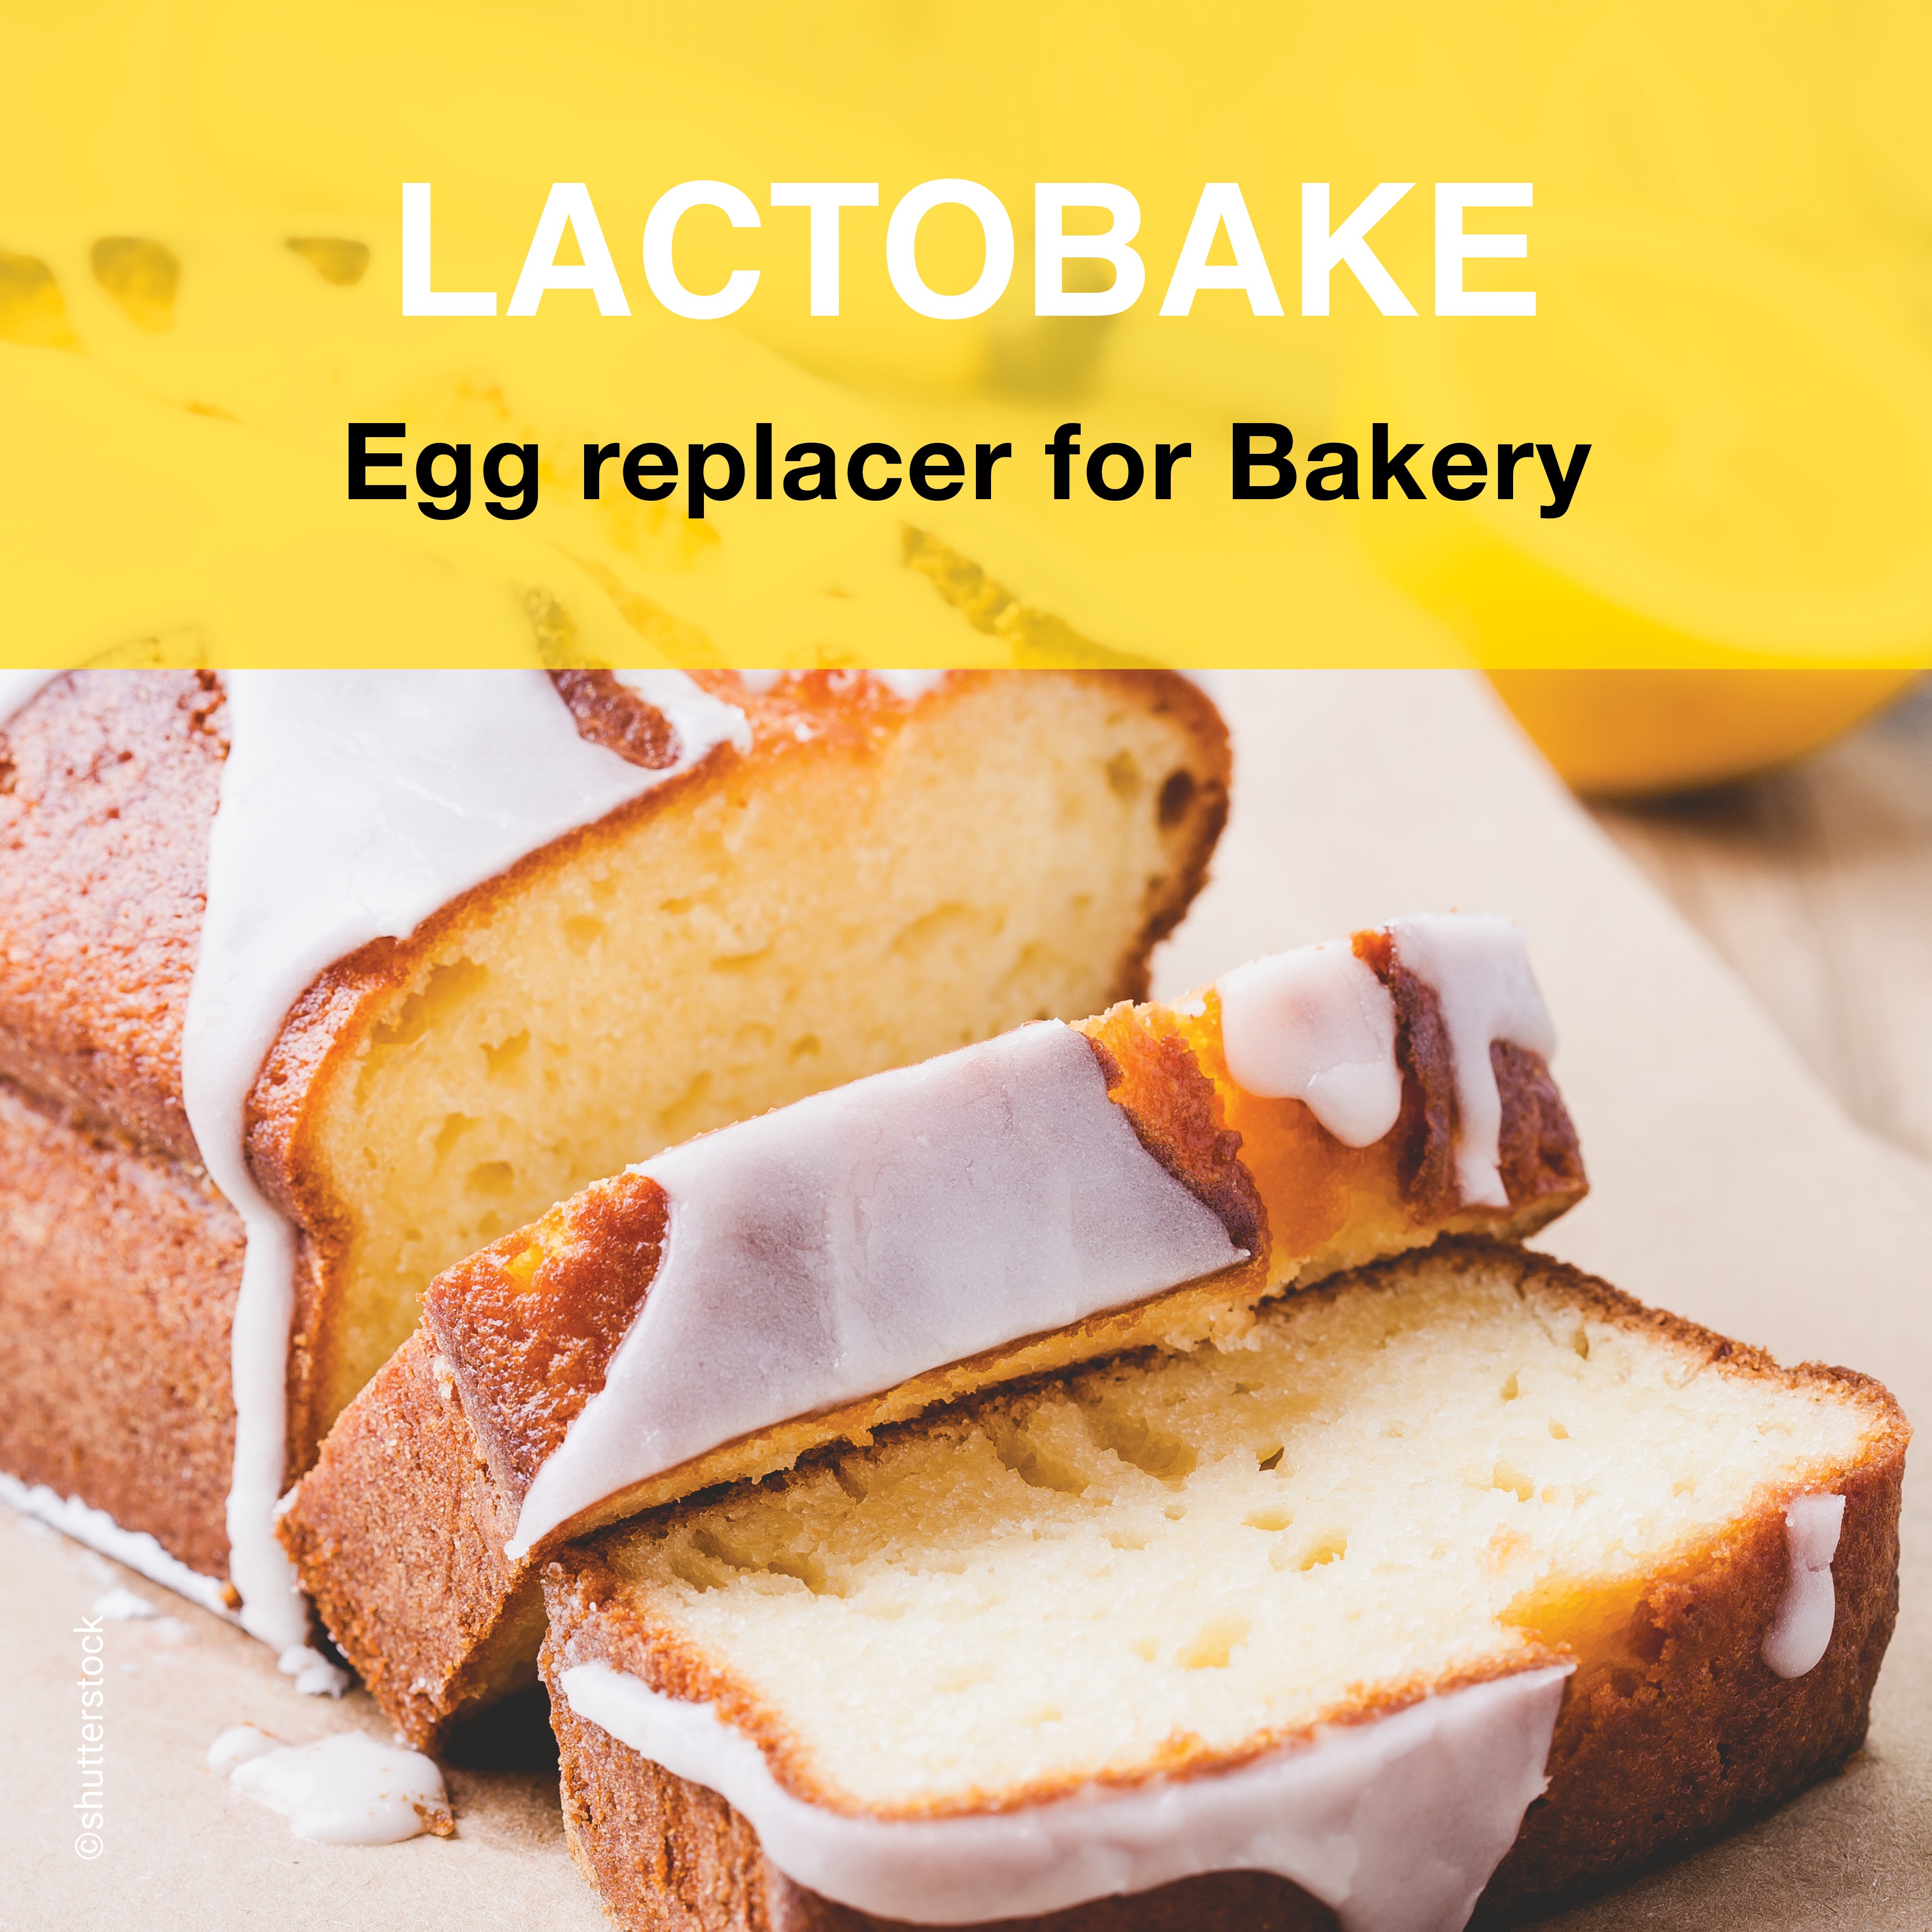 Lactobake - egg replacer for bakery